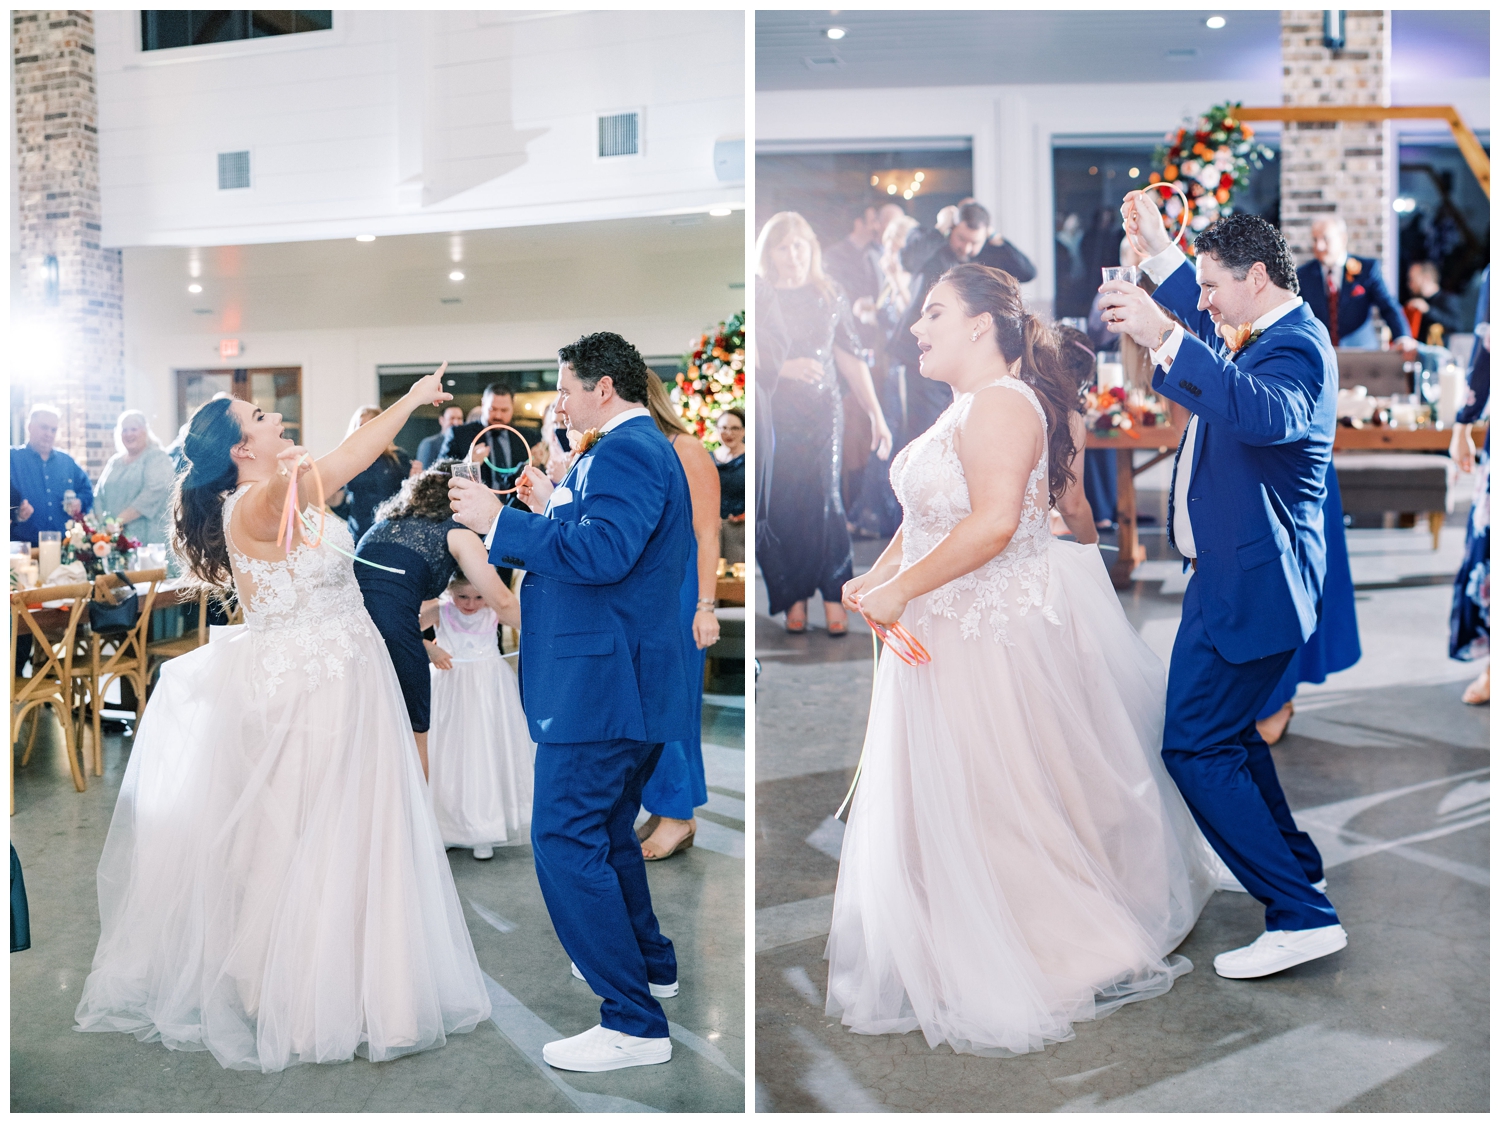 Arrowhead Hill wedding reception with bride and groom dancing